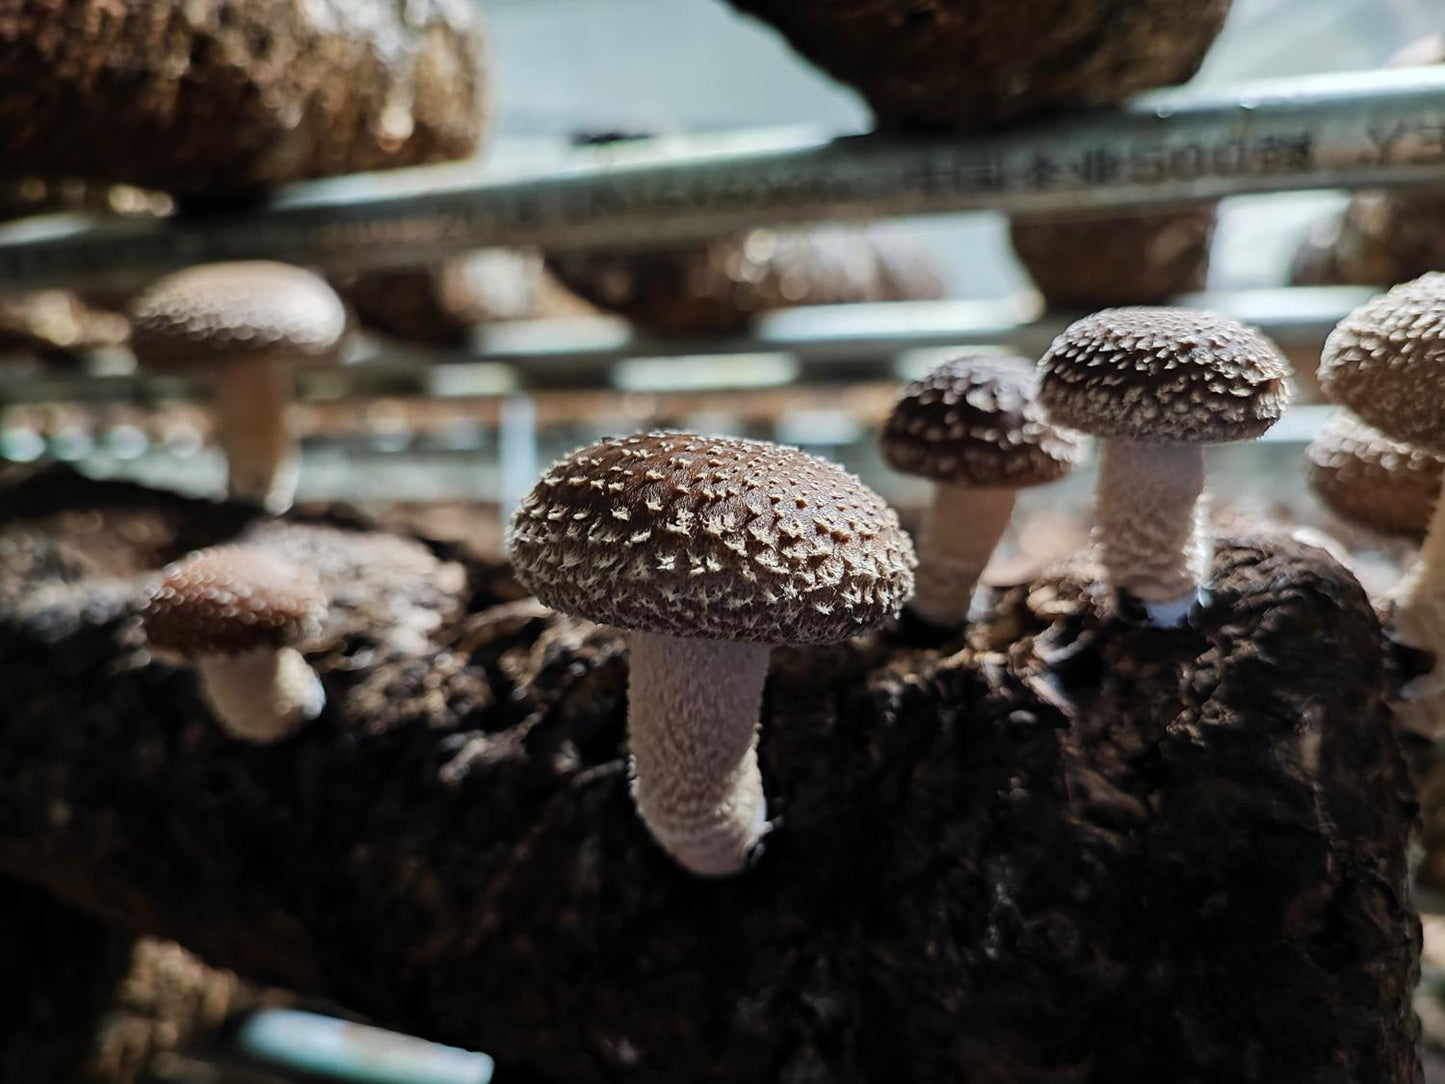 Mushroom kit, an organic shiitake mushroom growing kit